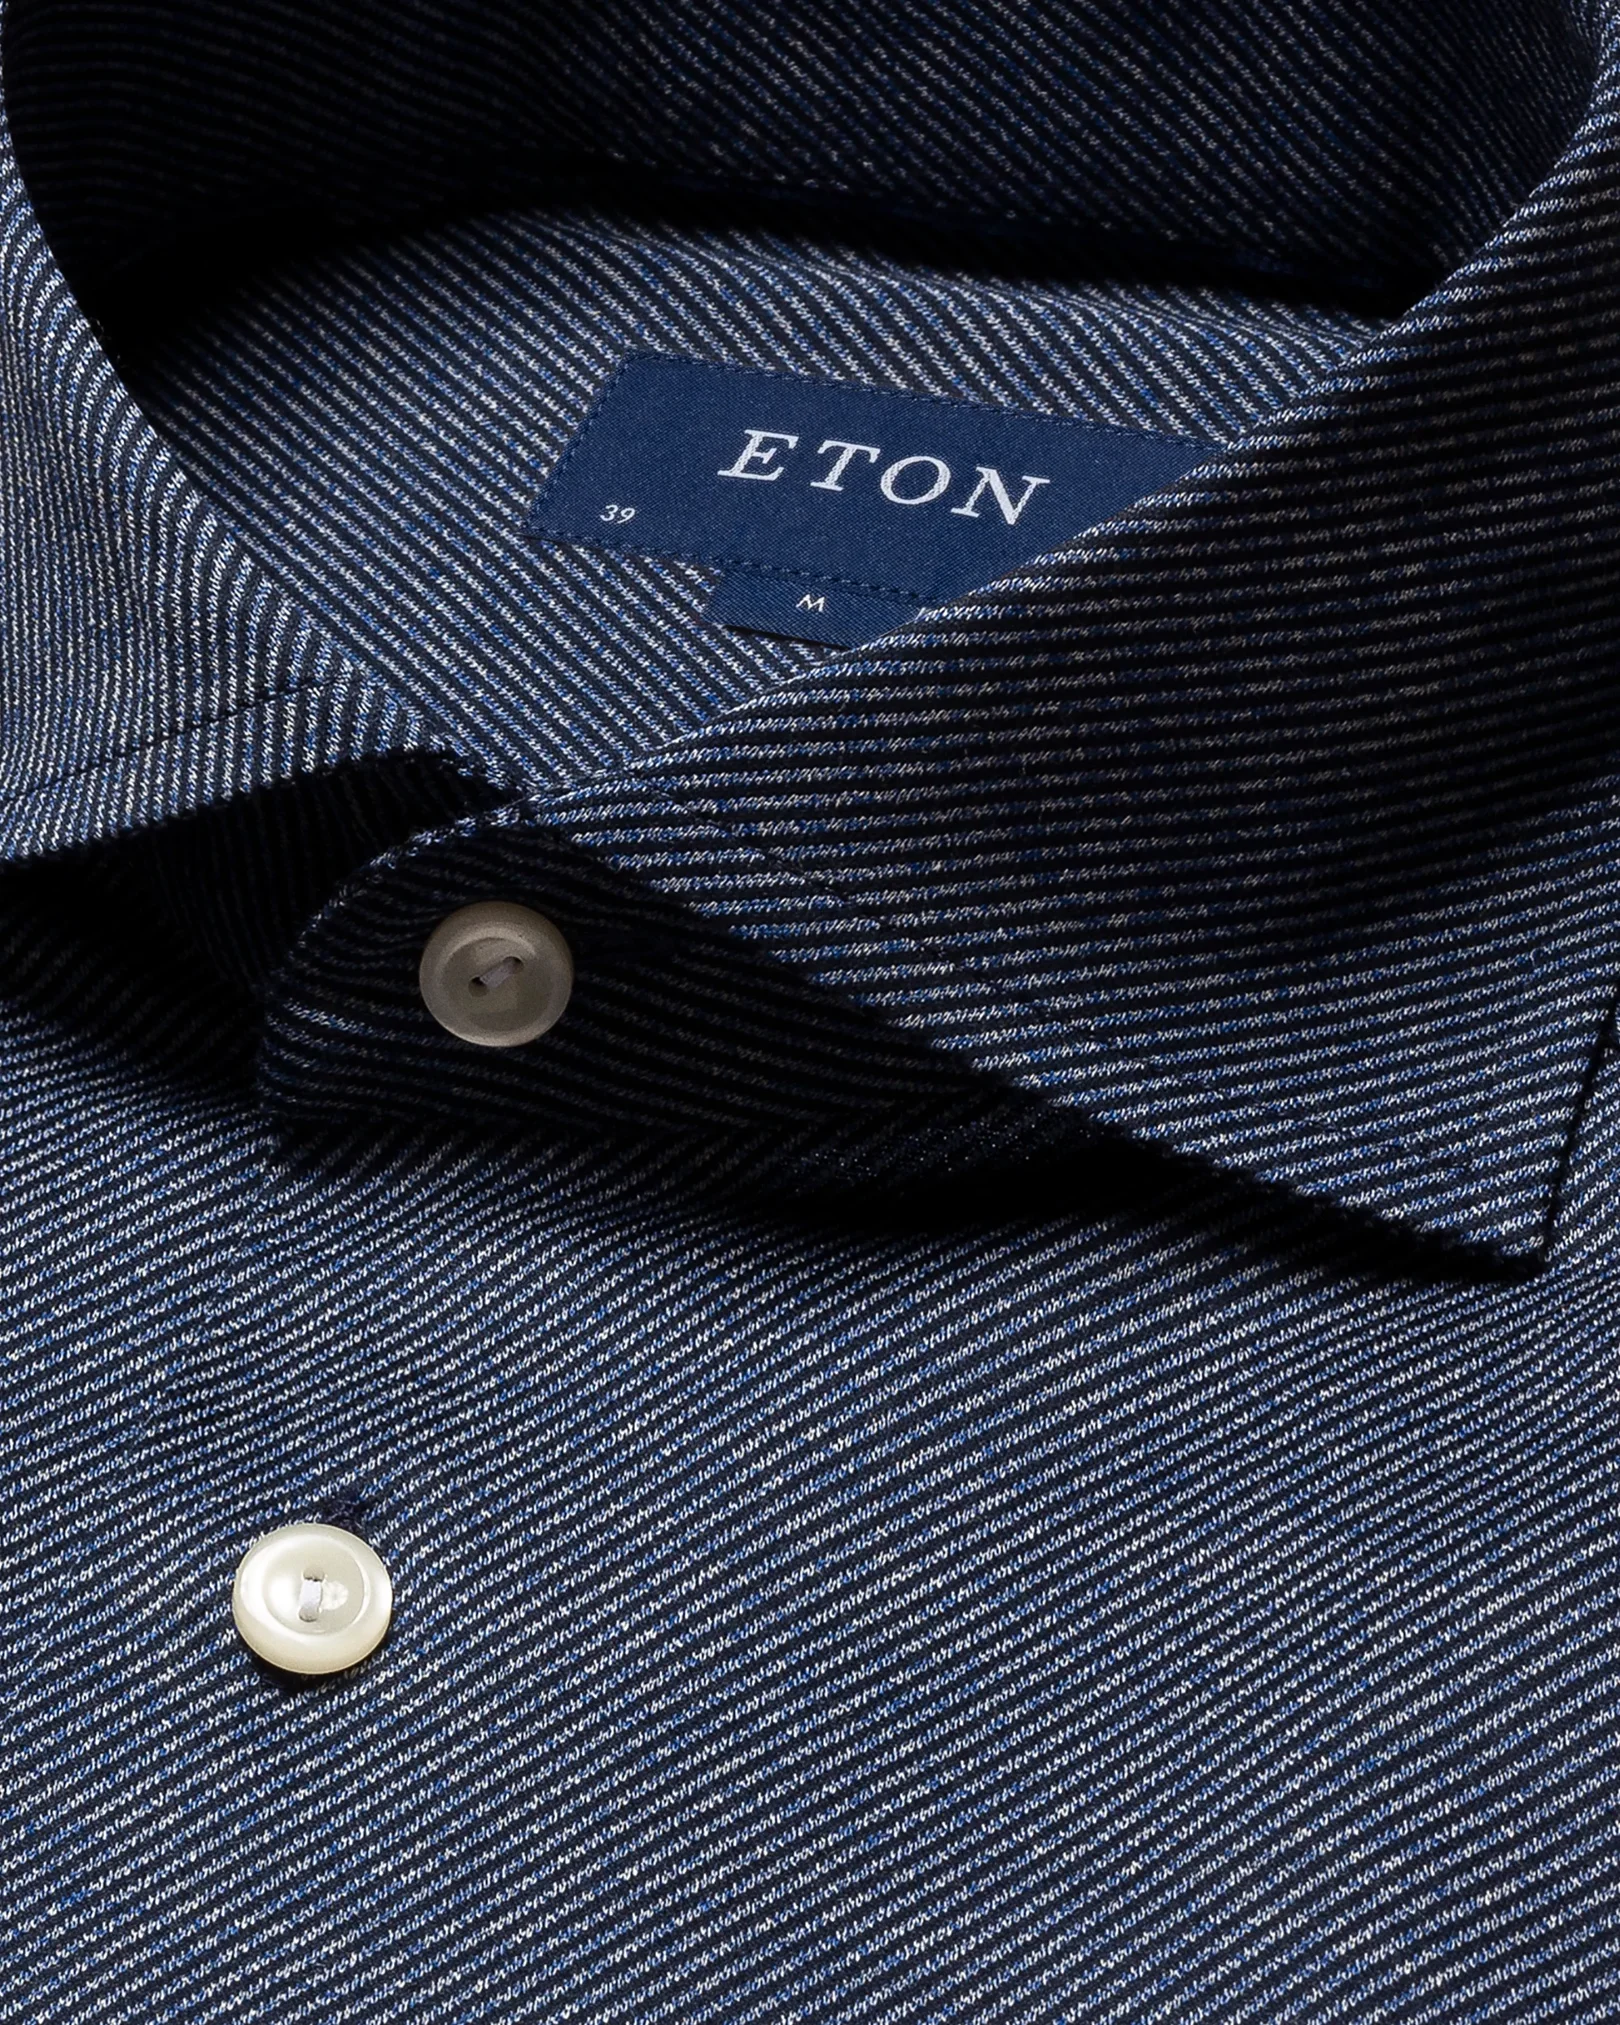 Eton - navy blue knit king